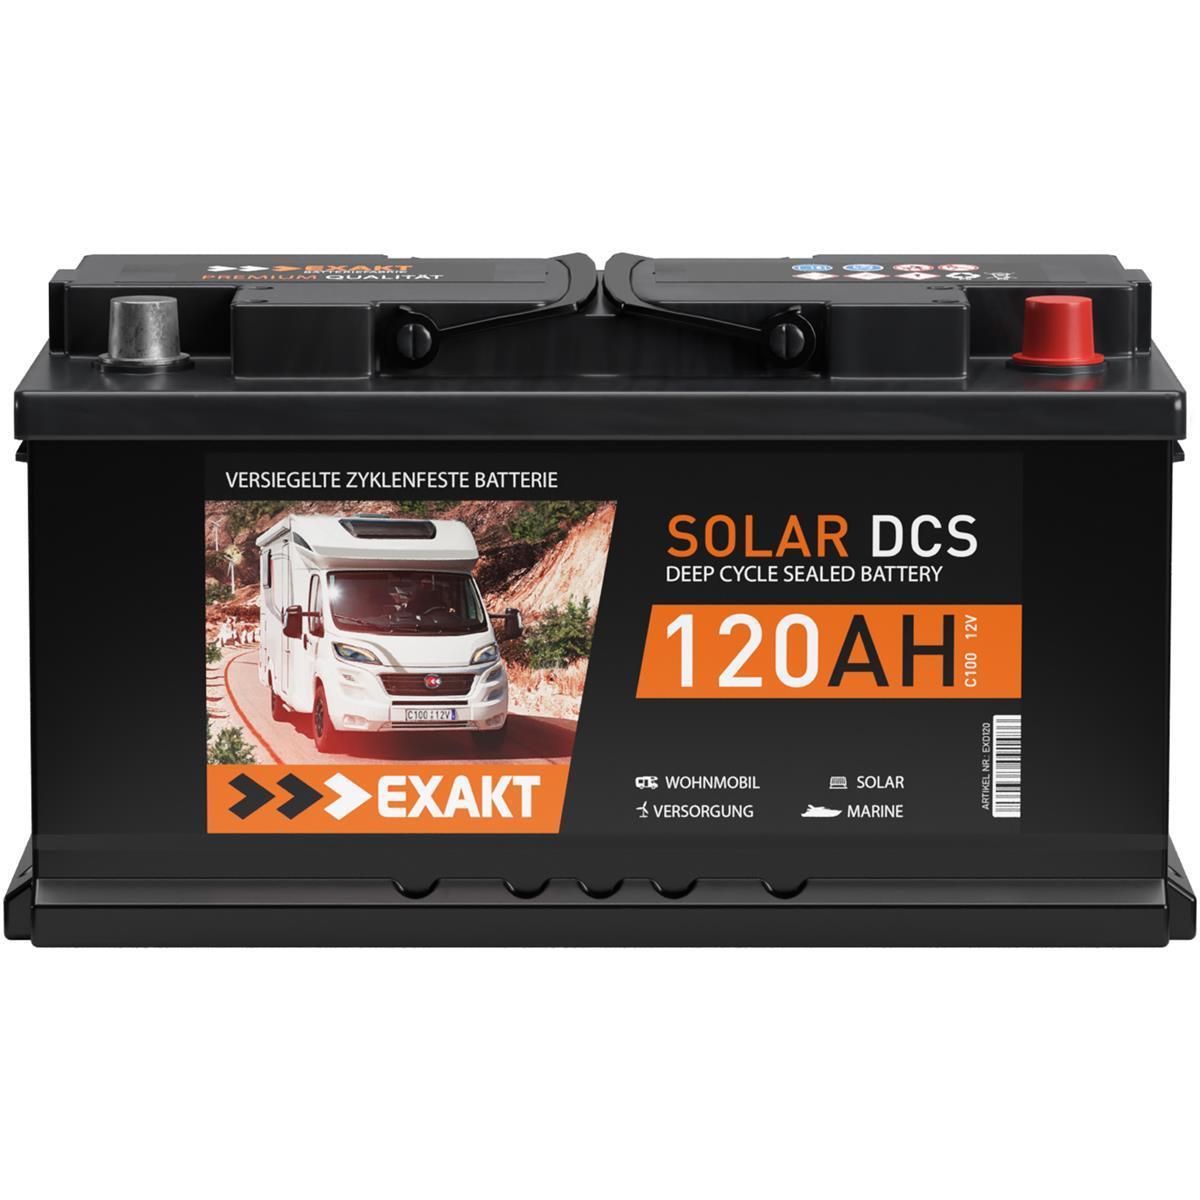 Gelbatterie 120Ah Electronicx Edition Gel Batterie 12V Wohnmobil Versorgung